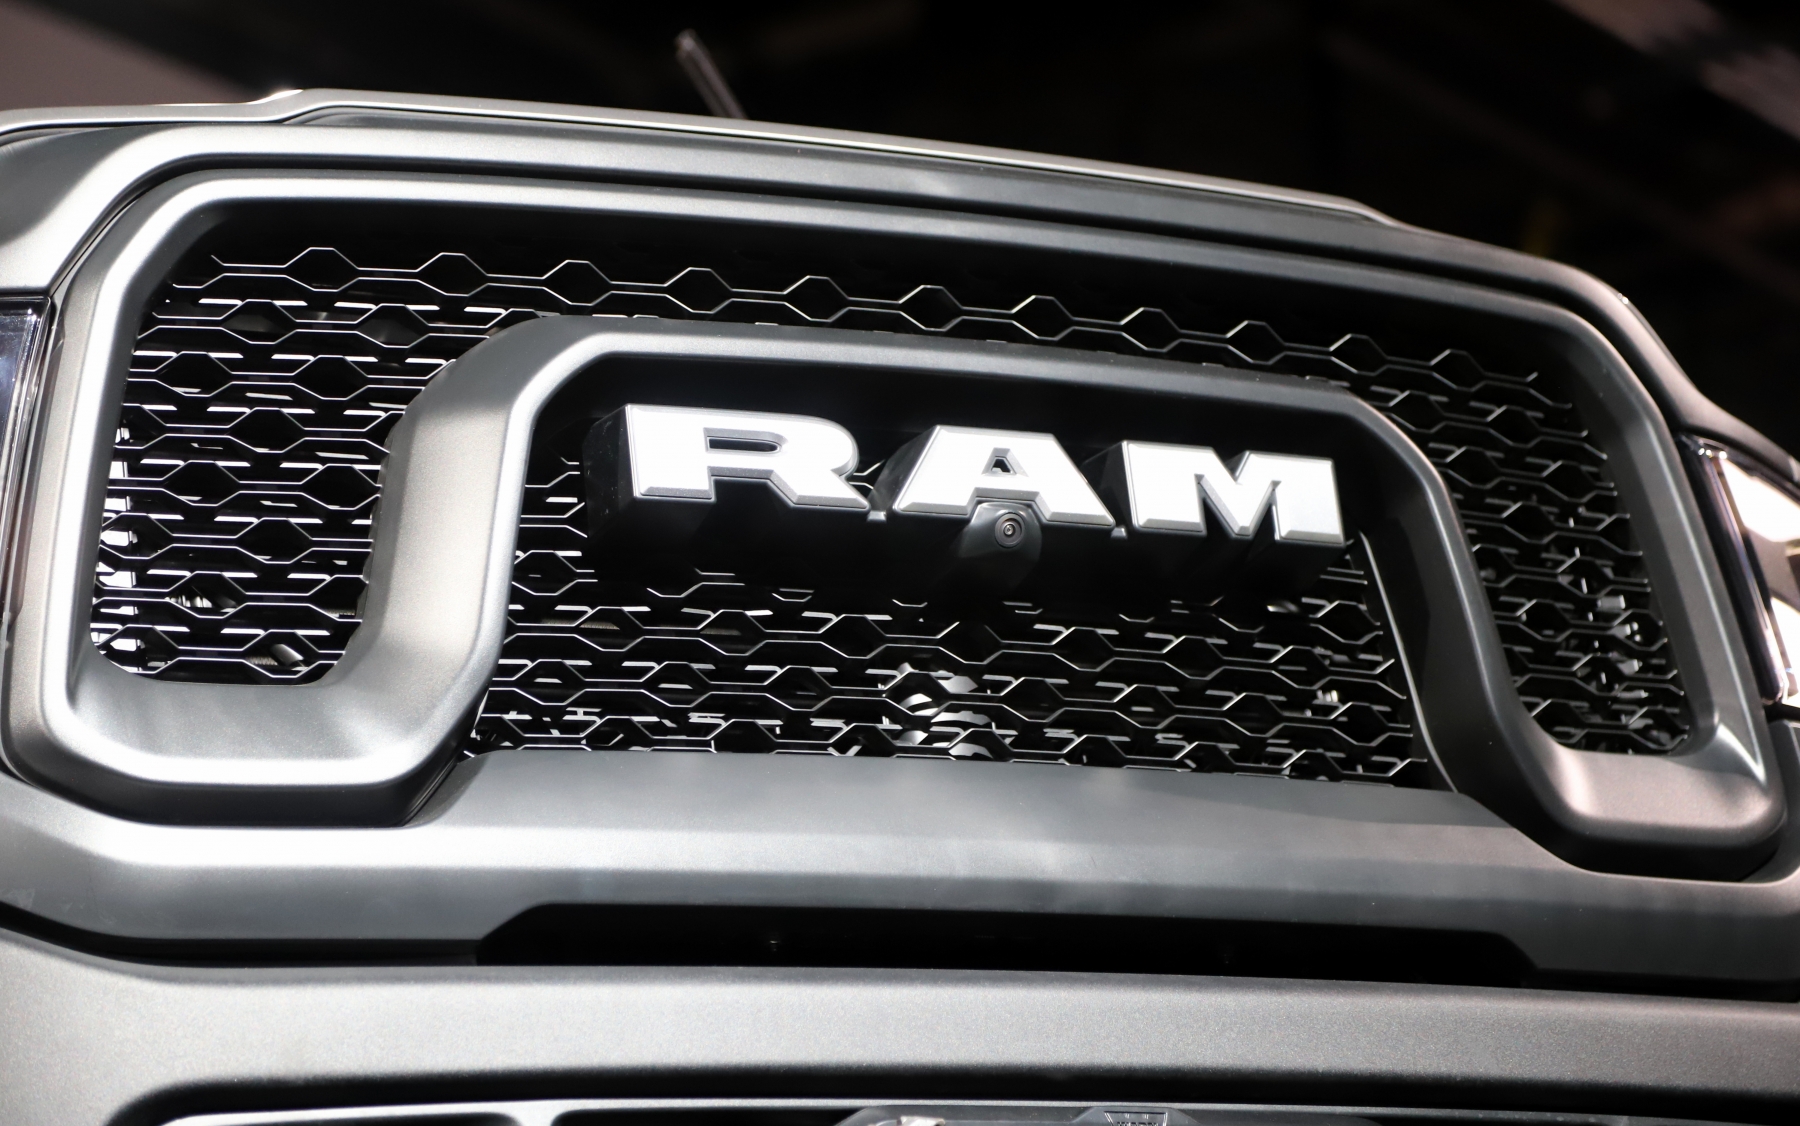 2019 RAM Power Wagon (HDRAMS)